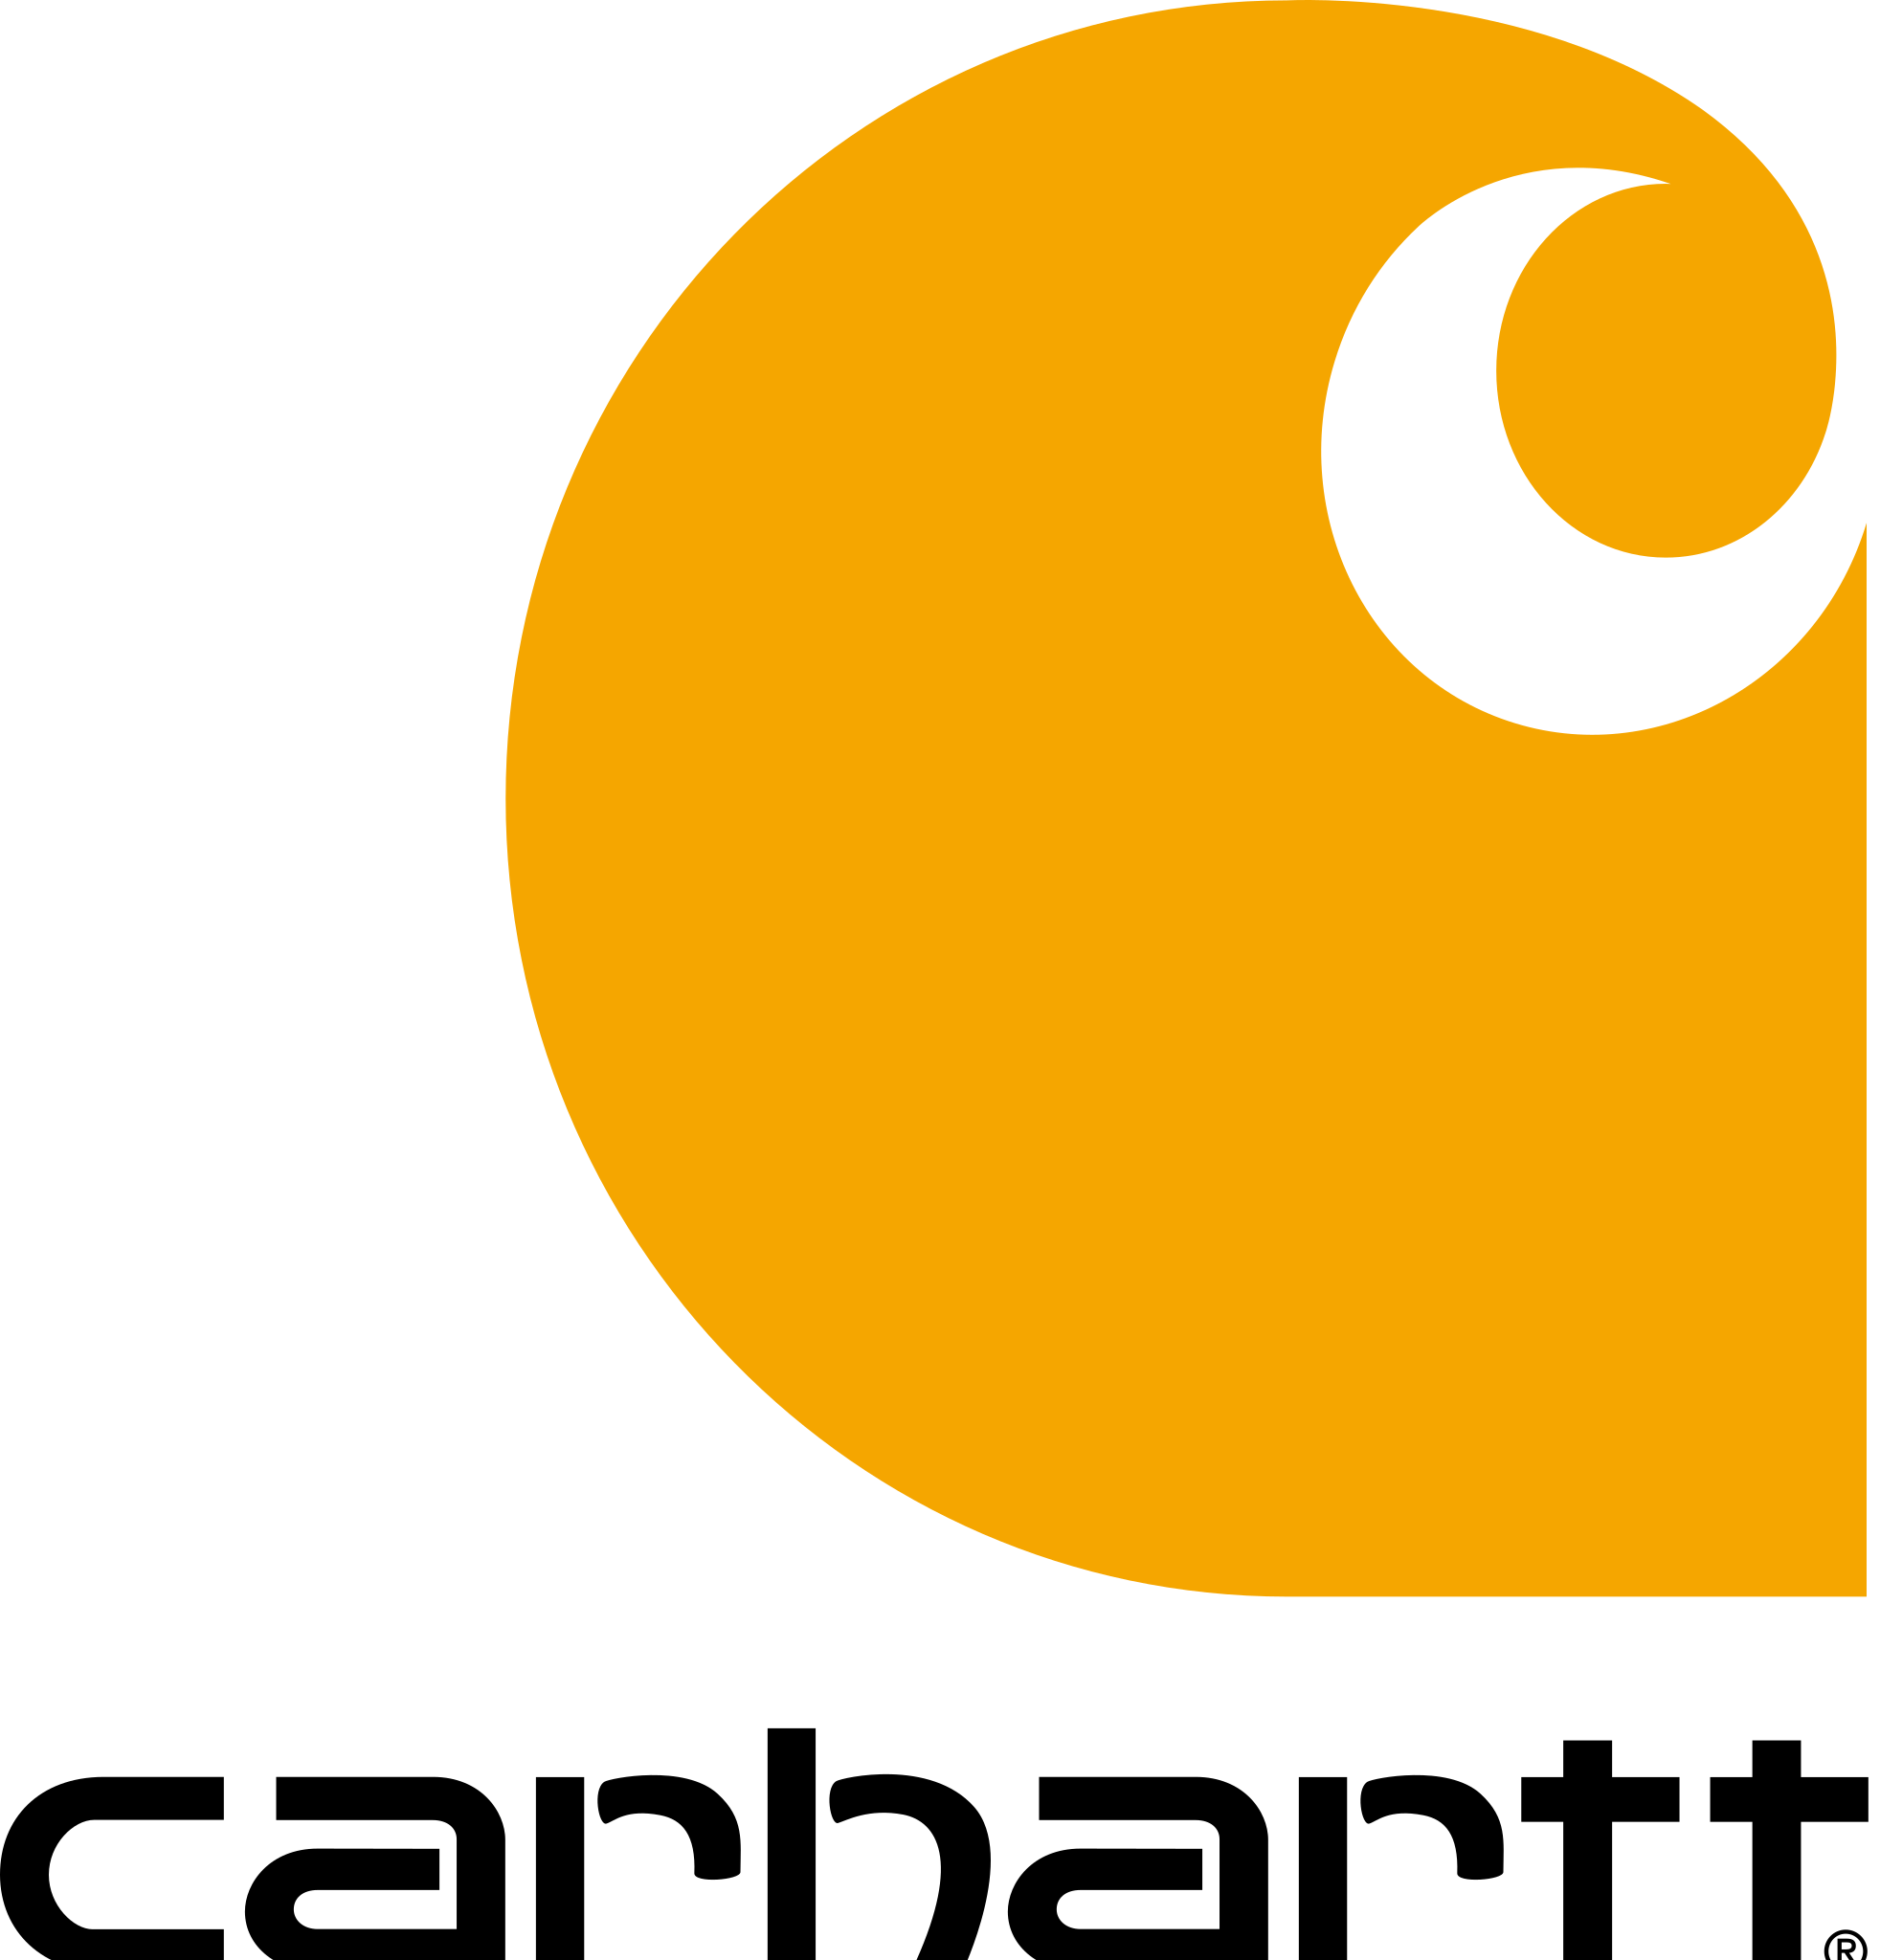 Carhartt_logo.svg.png